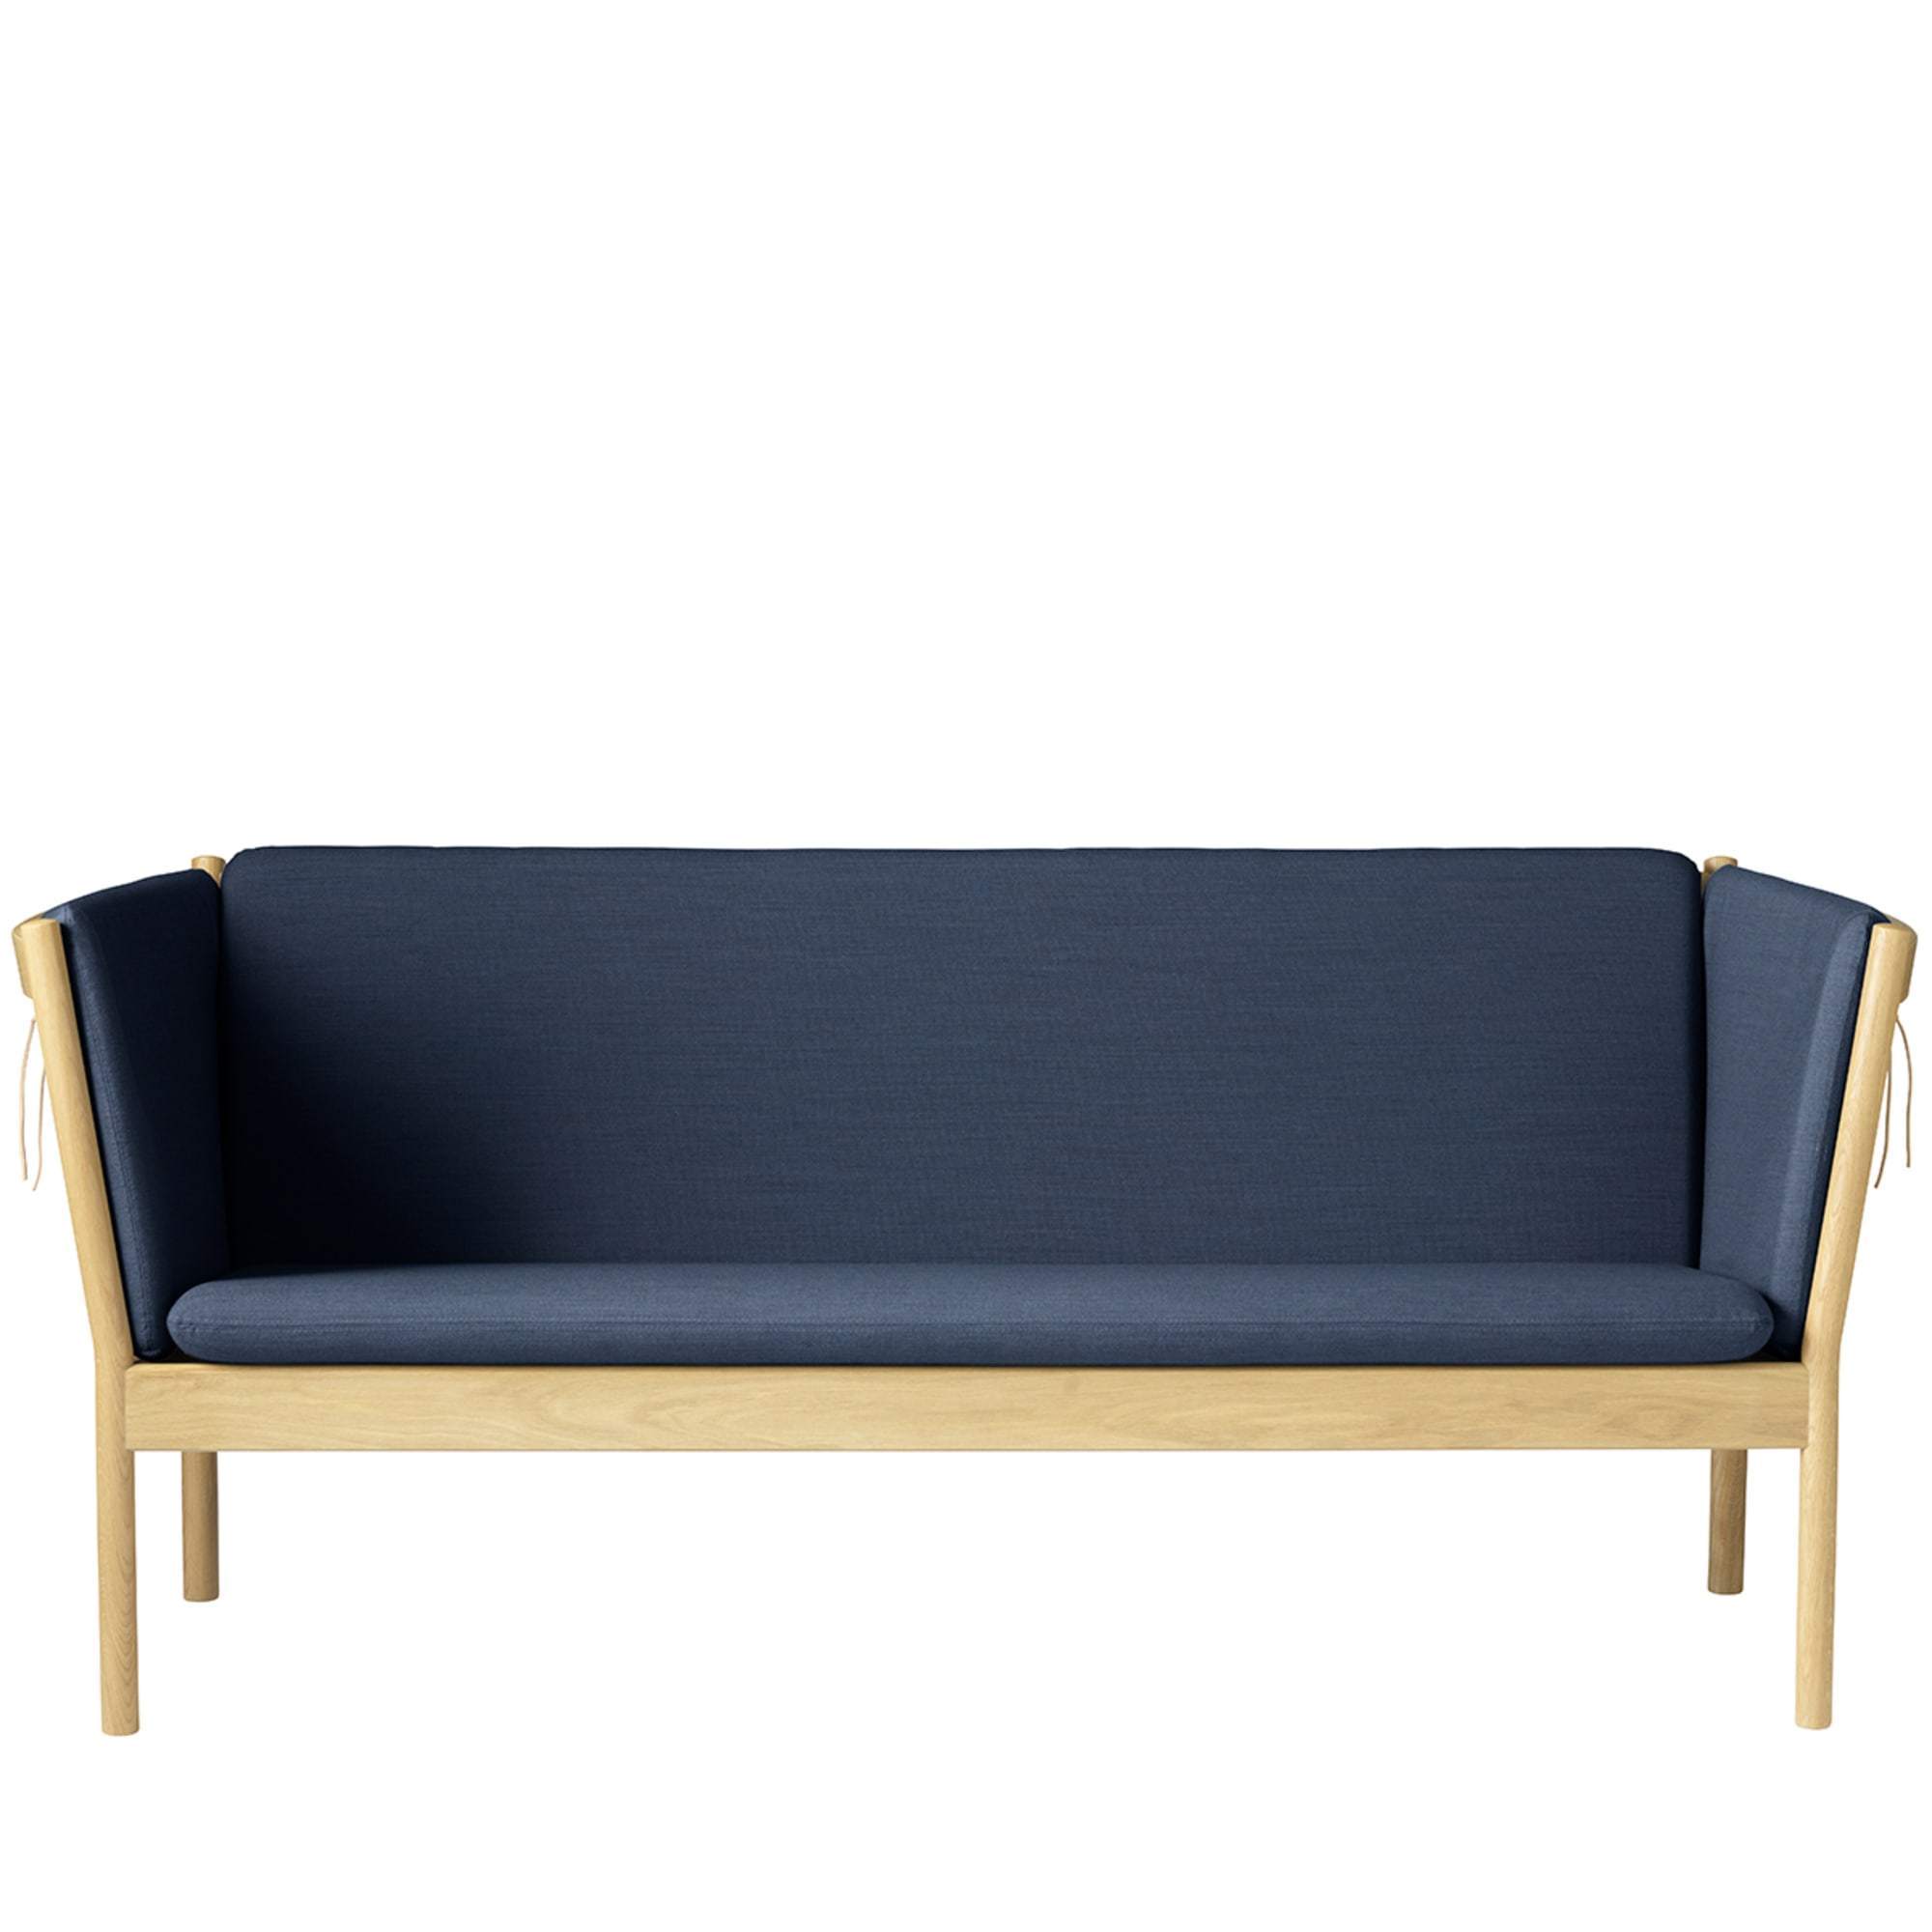 FDB Møbler J149 3 -osobowa sofa, dąb, ciemnoniebieski materiał